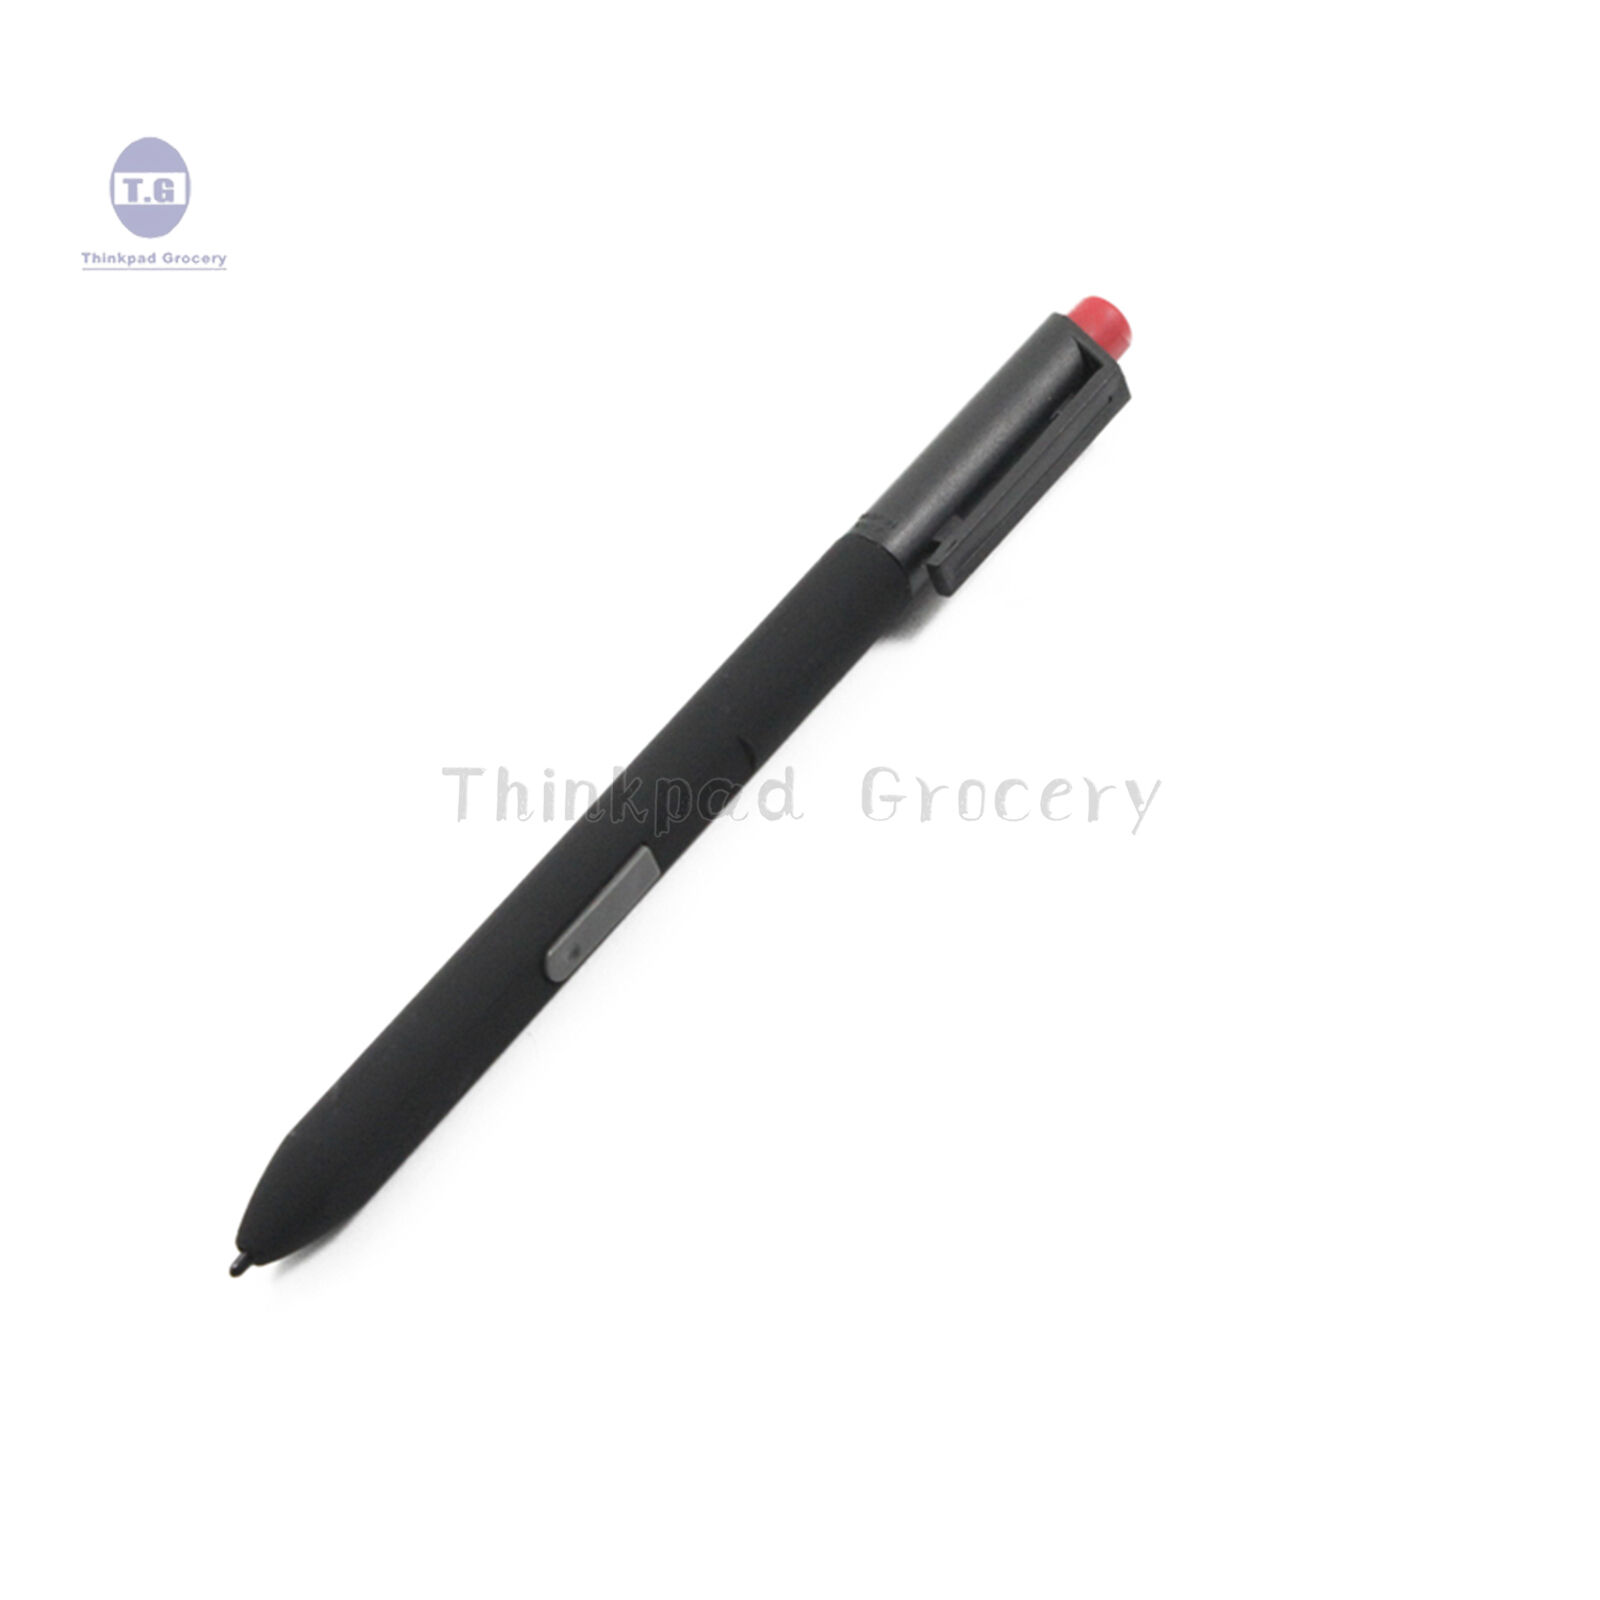 Digitizer Stylus Pen for Microsoft Surface Pro1 Pro 2 ThinkPad X200t X220t X230t